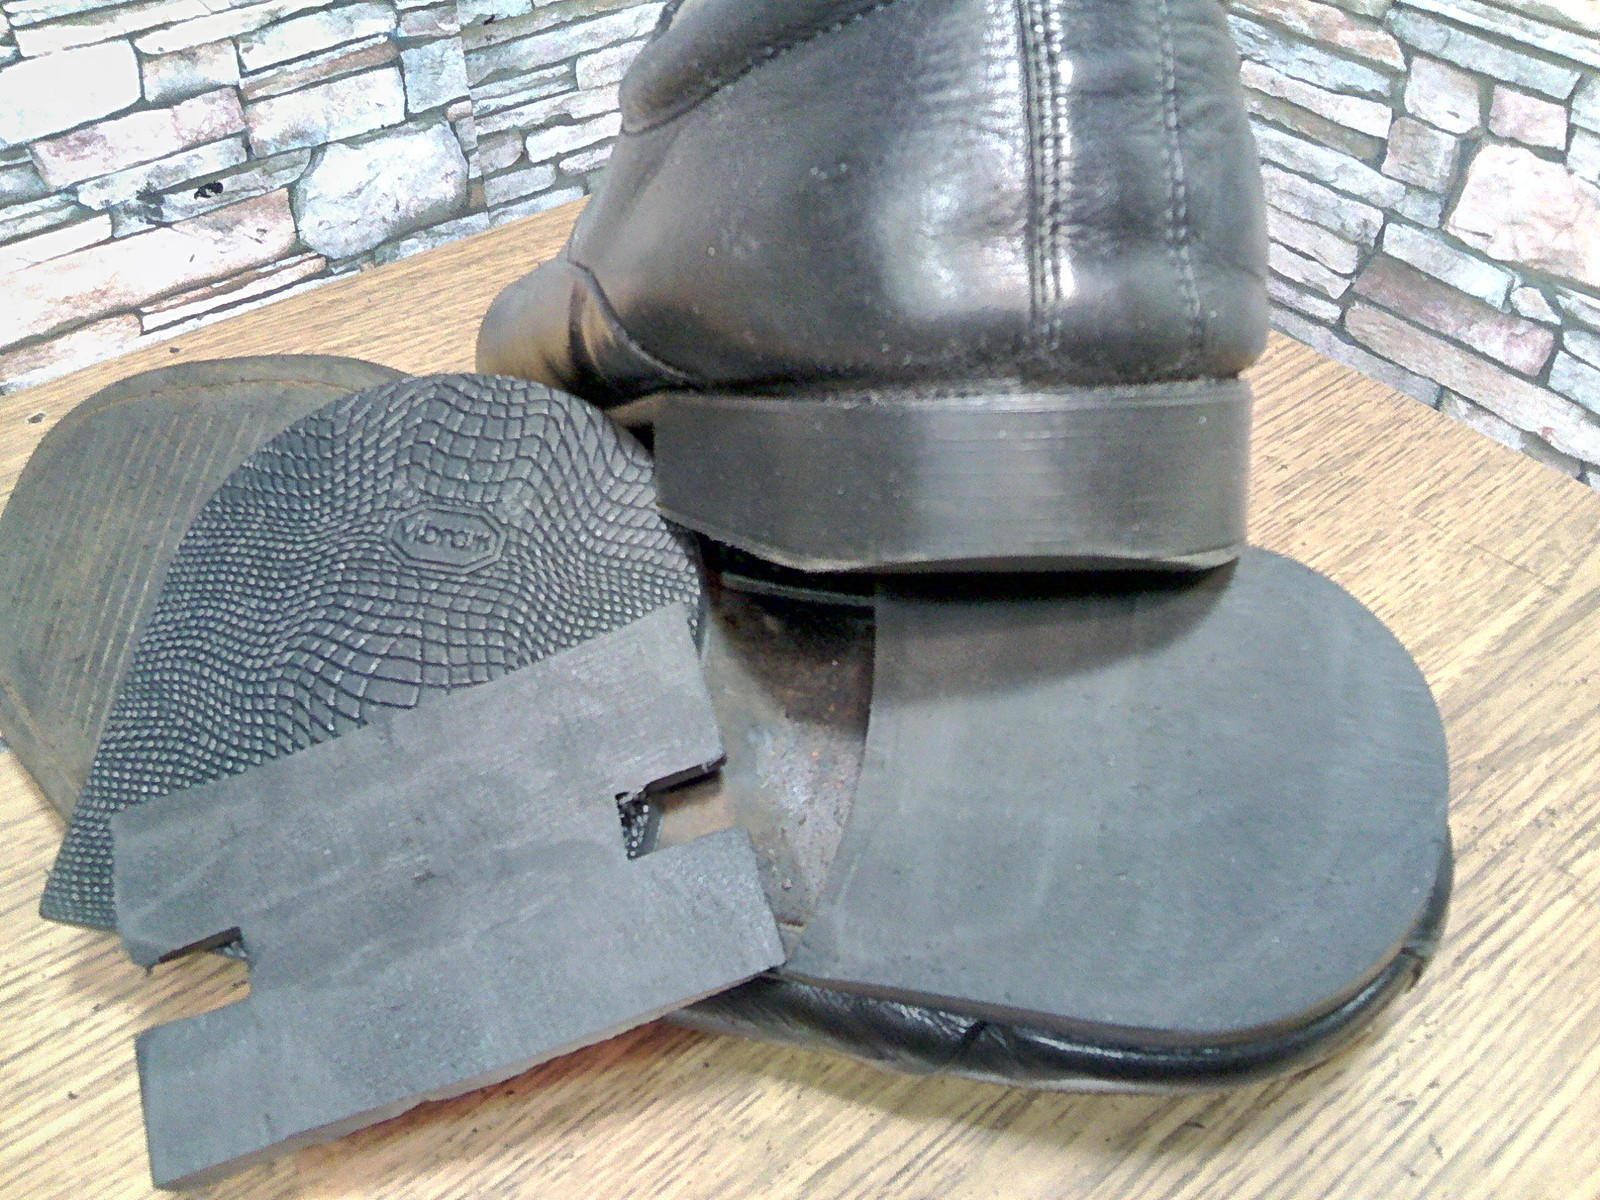 When a man's heel was brought in a little. - My, Shoe repair, Heels, Work, The photo, Longpost